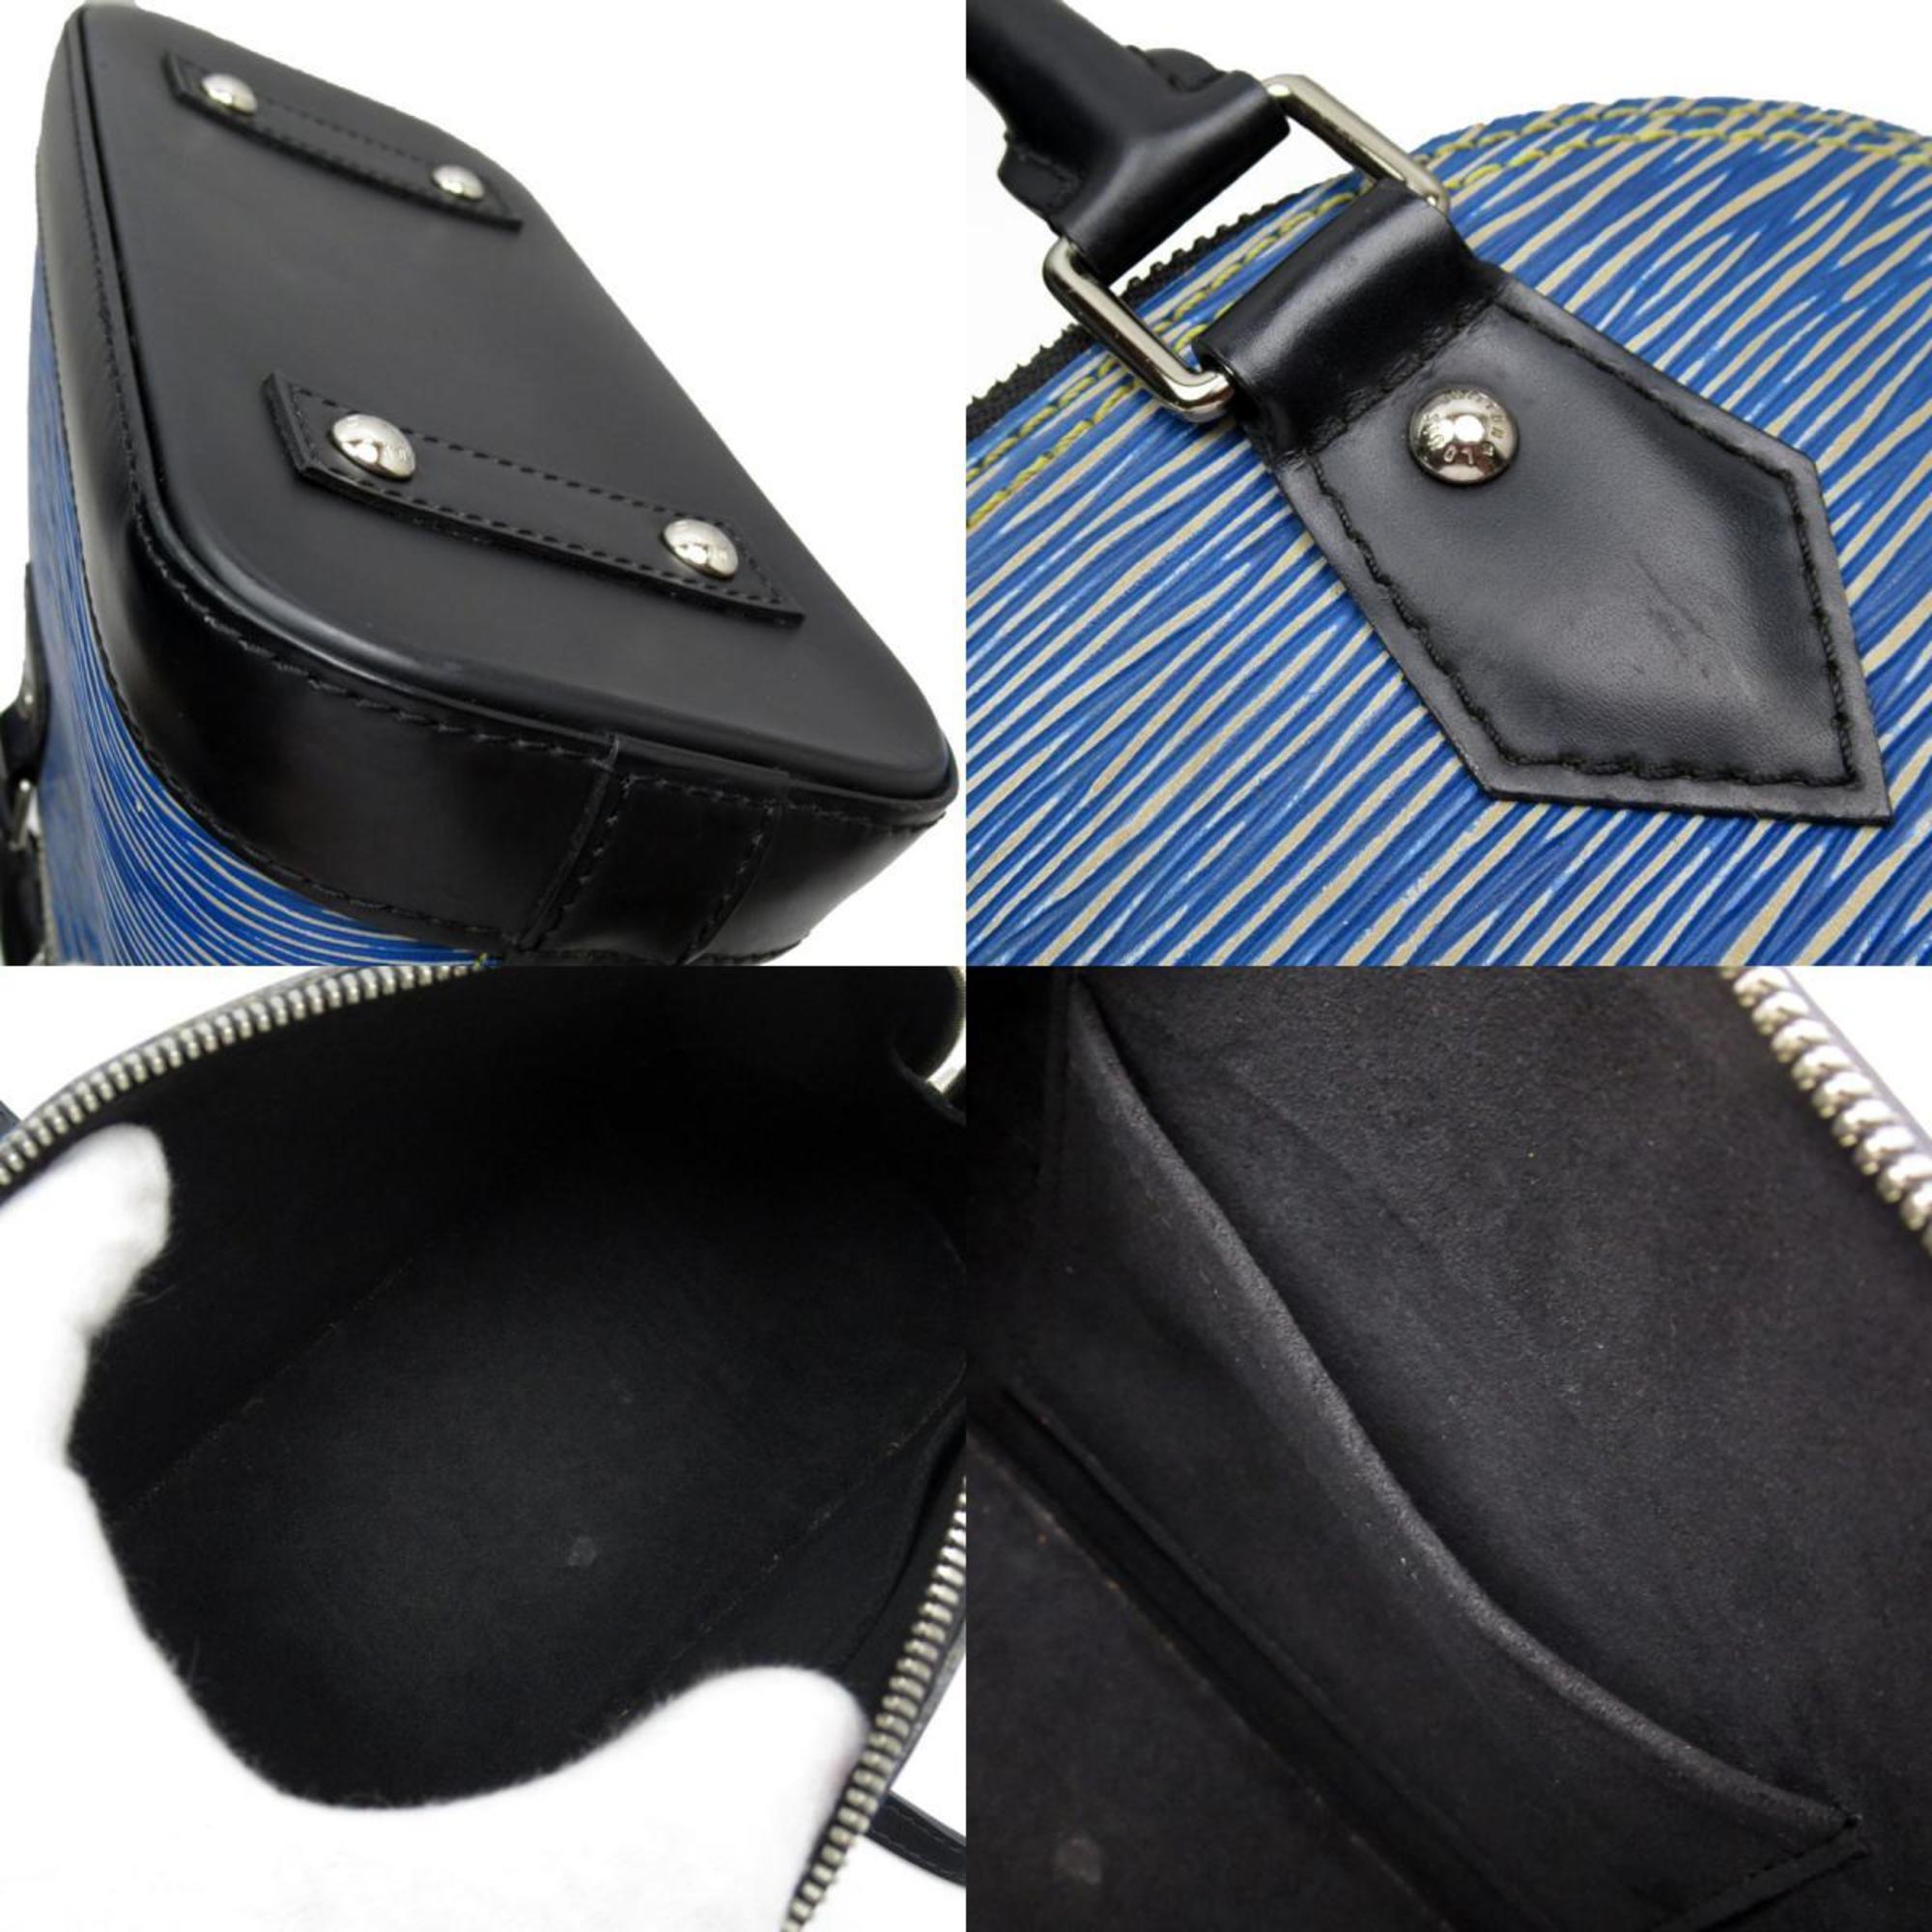 LOUIS VUITTON Handbag Shoulder Bag Epi Alma BB Leather Blue Black Silver Women's M41437 w0449i